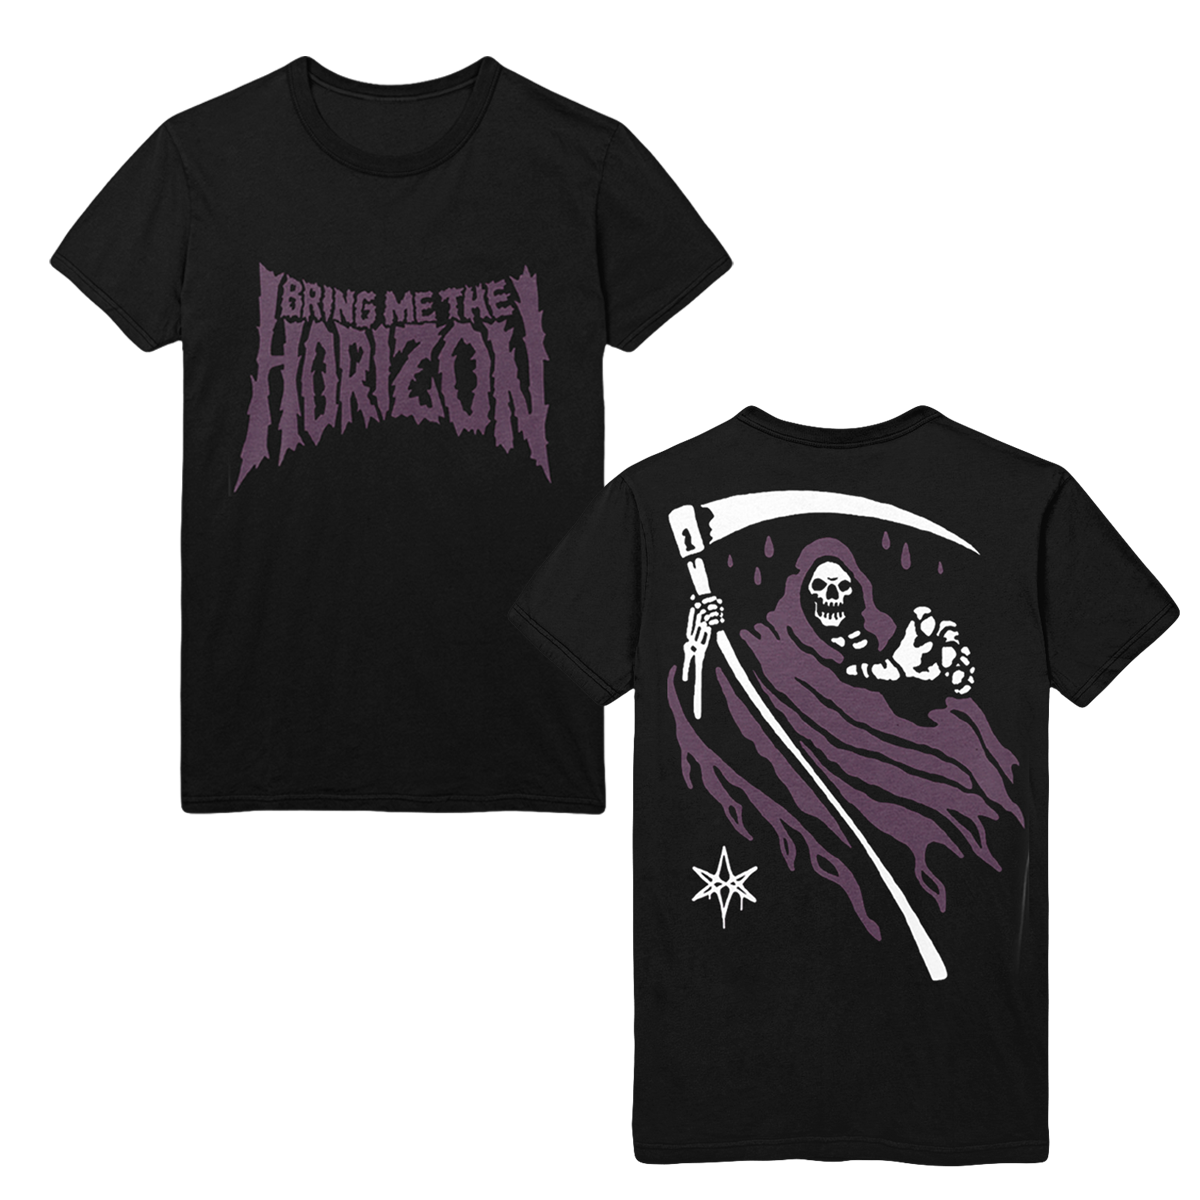 Reaper Black T-Shirt